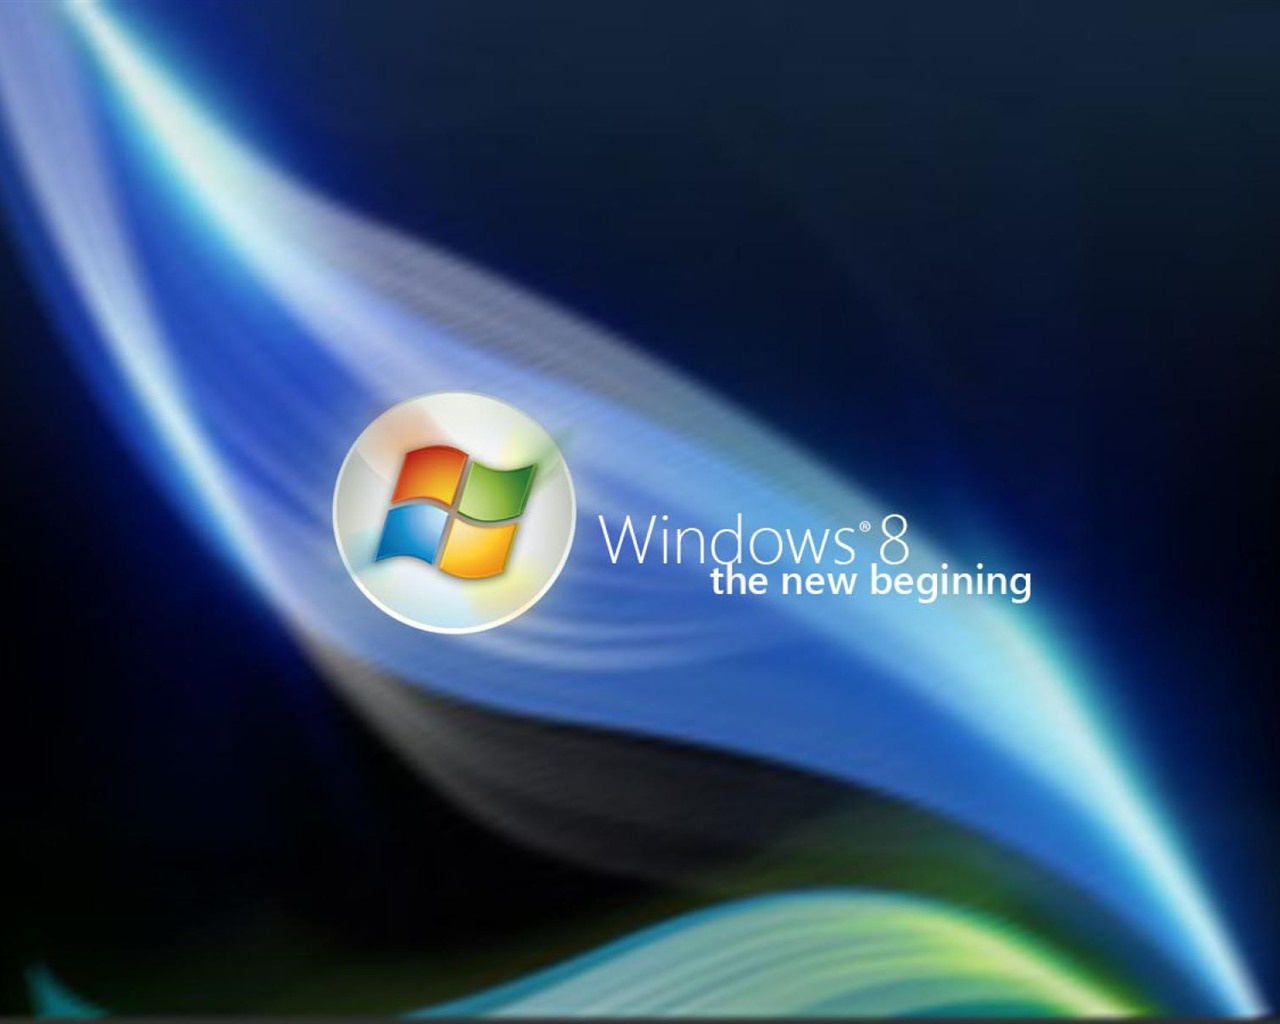 Windows 8 主題壁紙 (二) #10 - 1280x1024